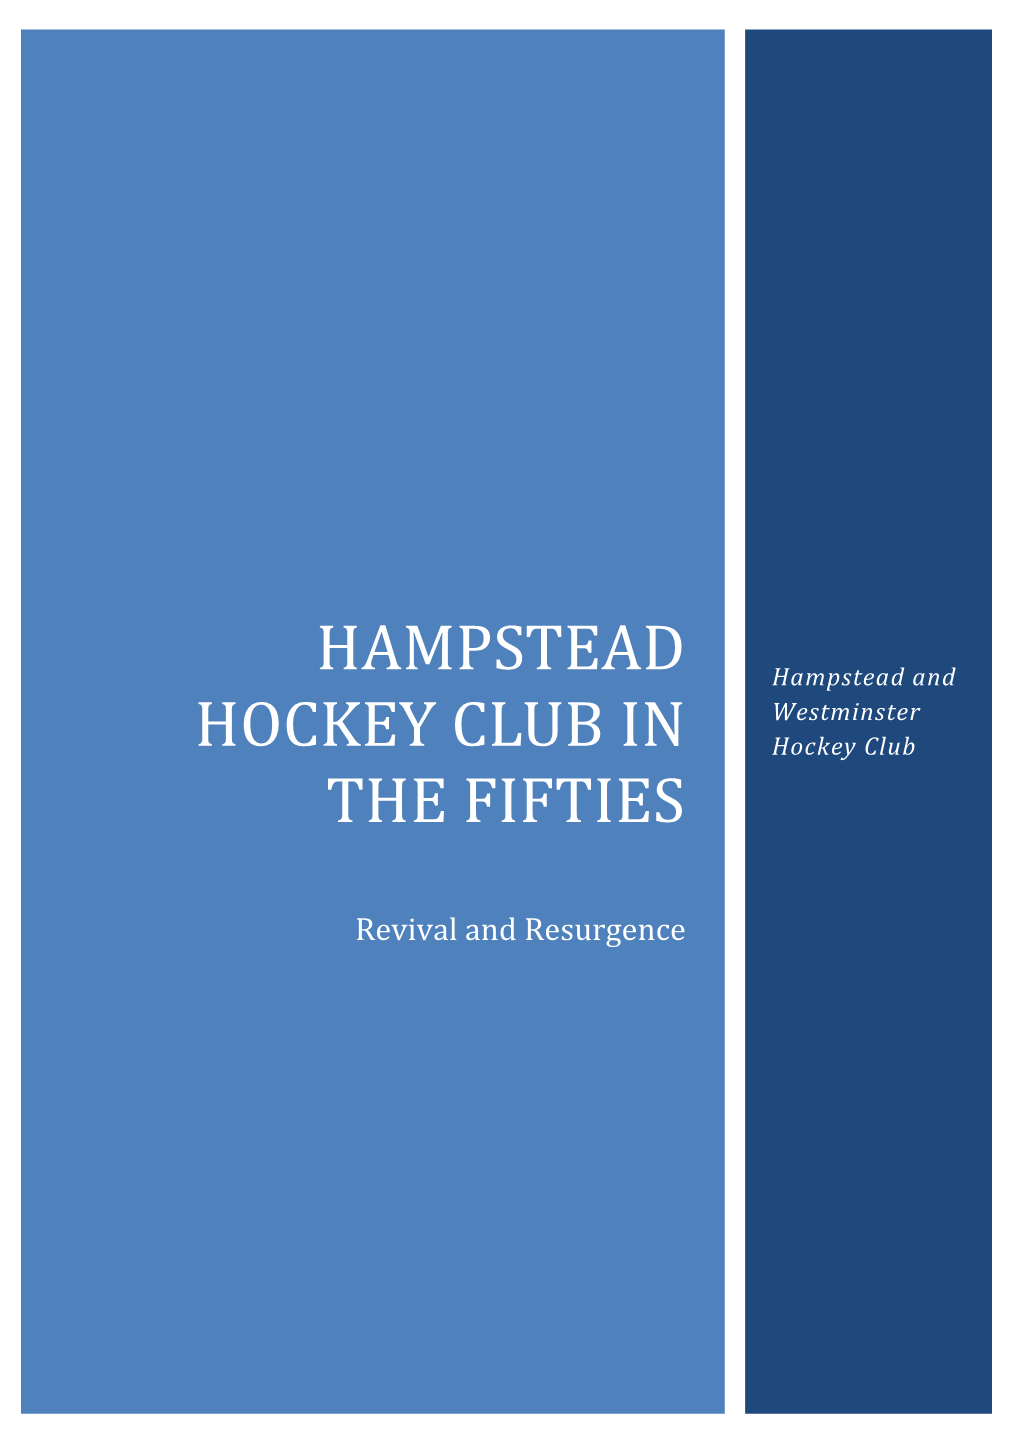 Hampstead Hockey Club in the Fifties